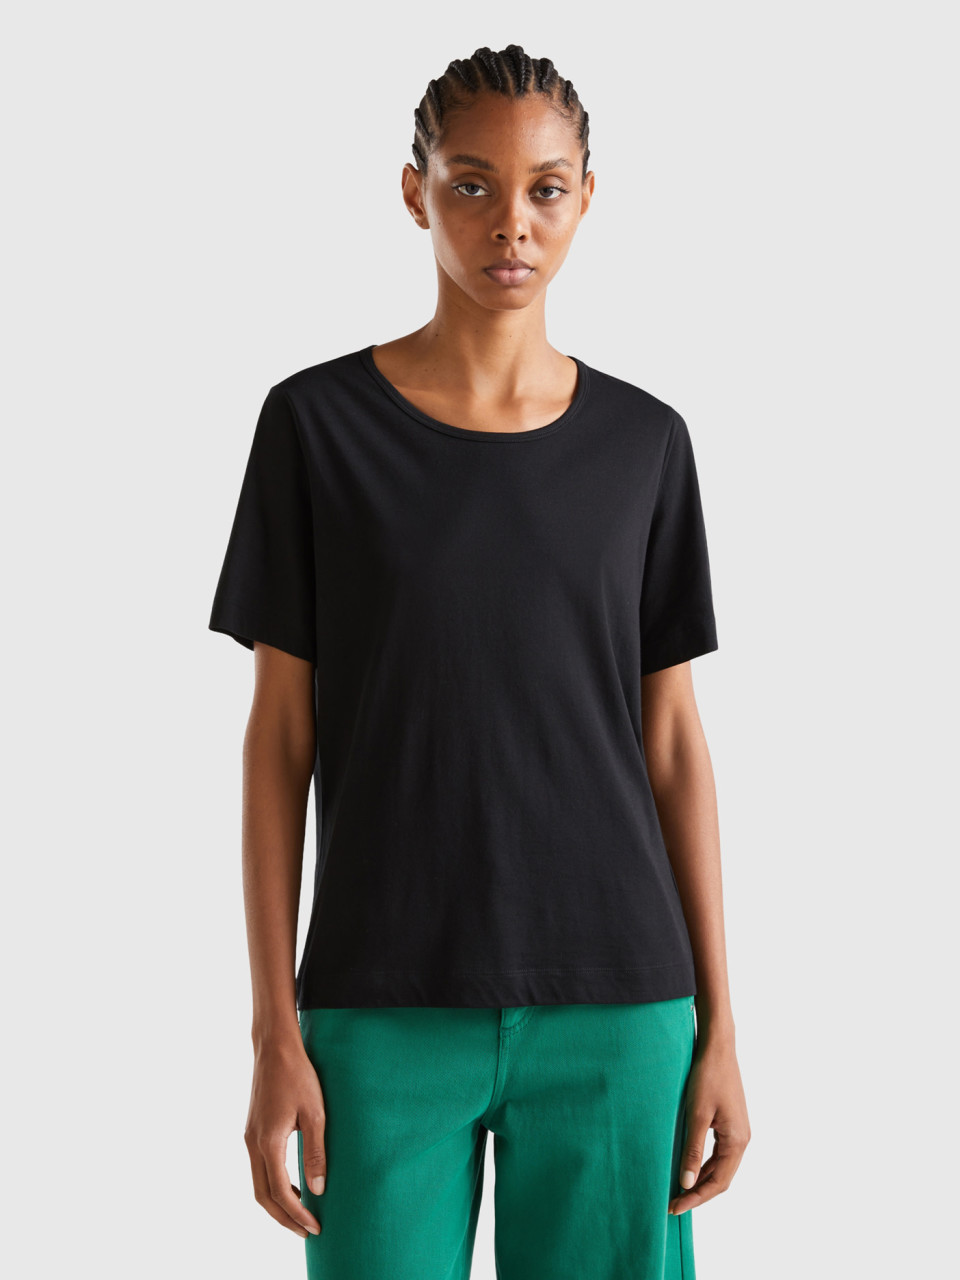 Benetton, Black Short Sleeve T-shirt, Black, Women